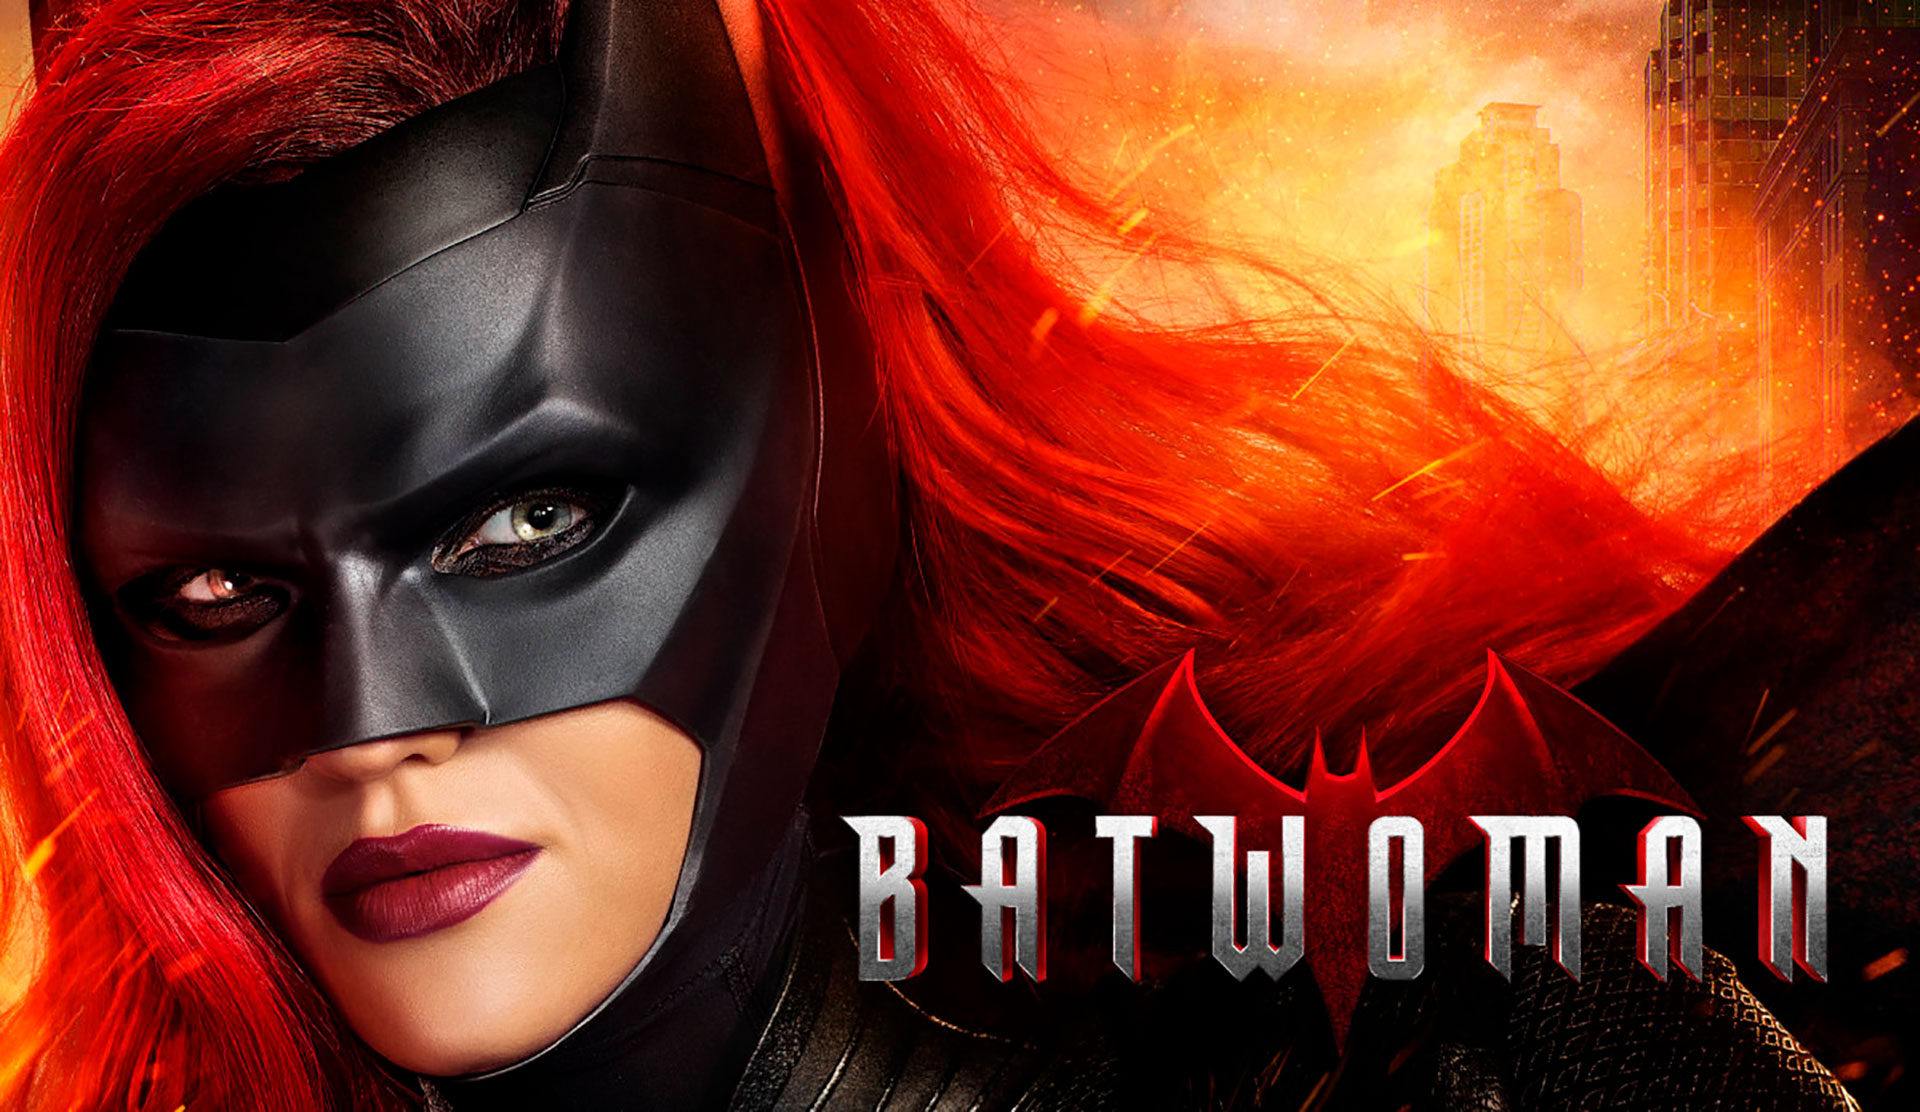 batwoman tapete,erfundener charakter,batman,superheld,cg kunstwerk,held